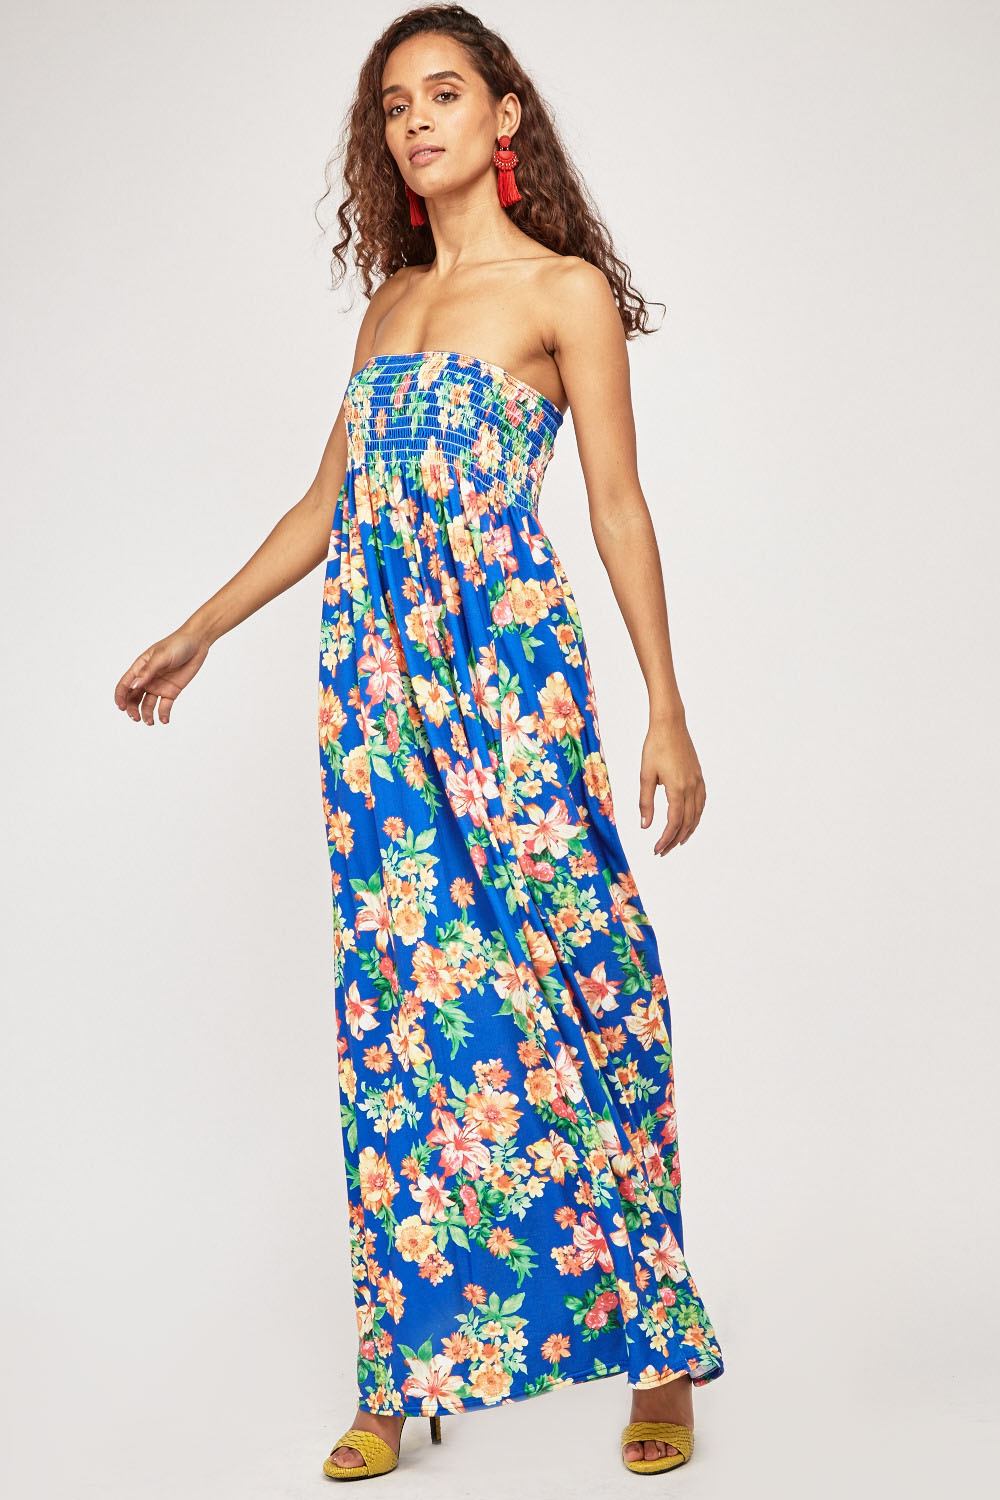 Floral Print Strapless Maxi Dress - Just $7